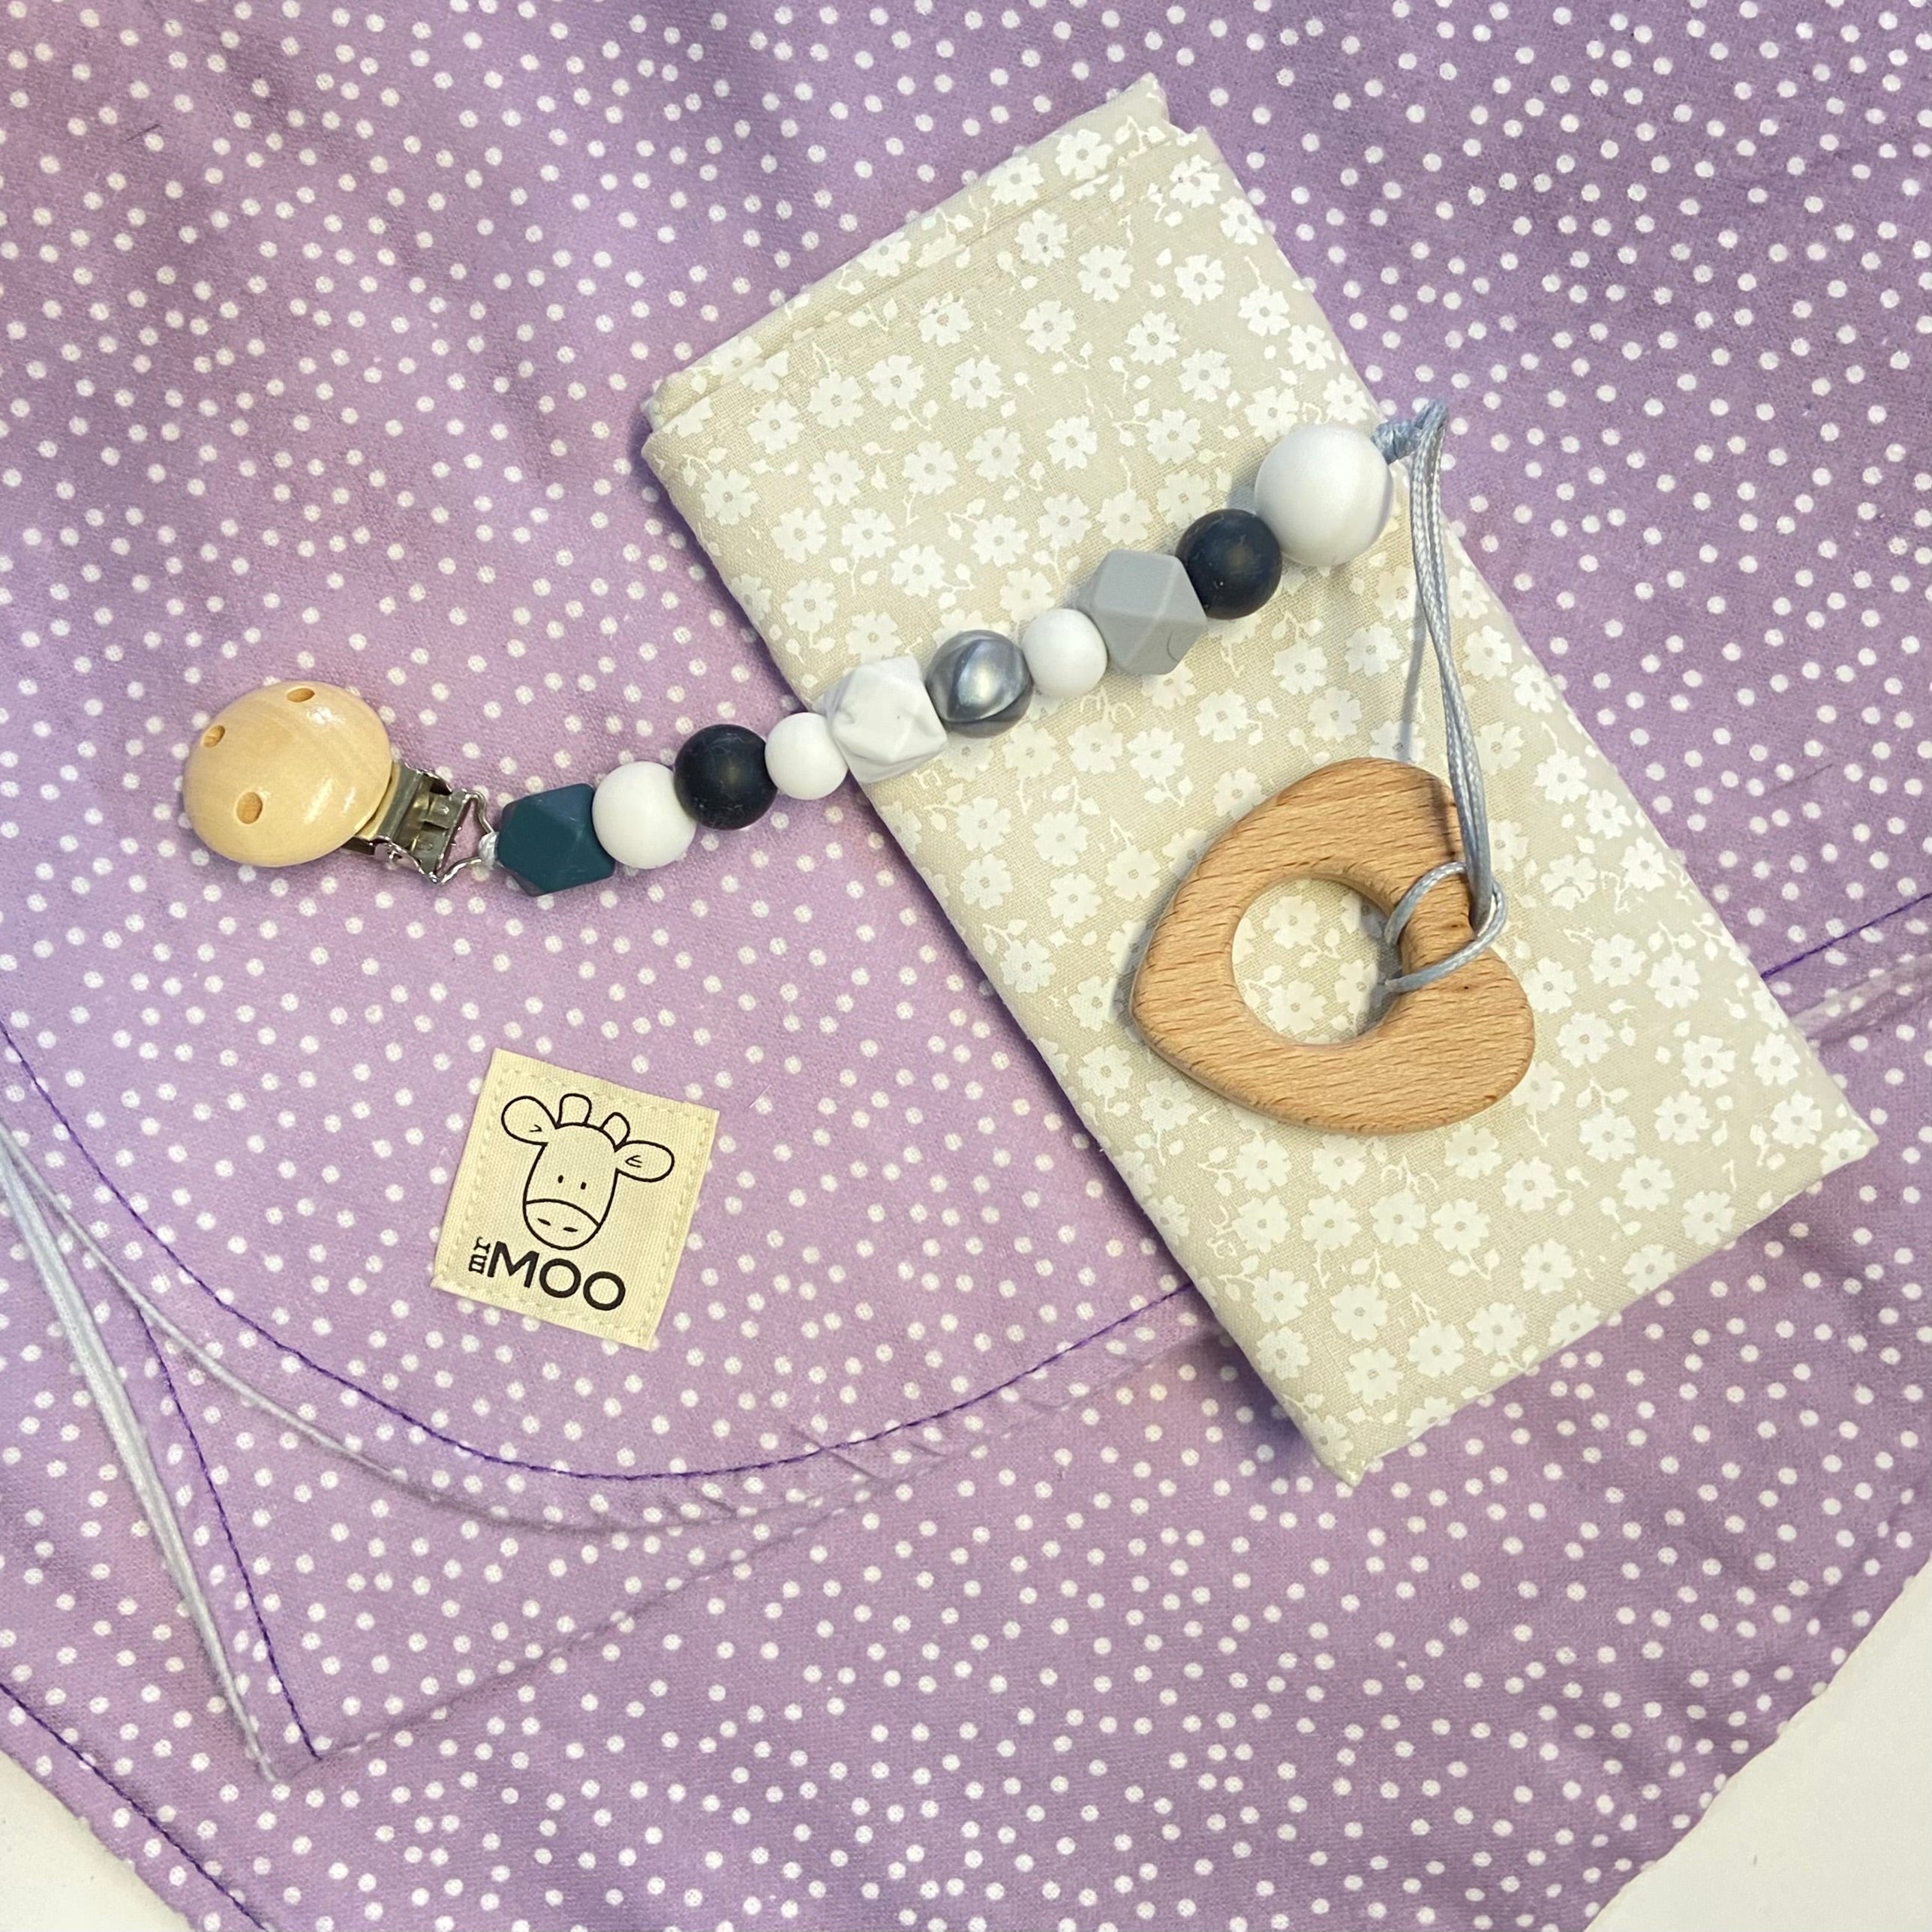 Gift Box - Blanket, Burp Cloth & Silicone Teether